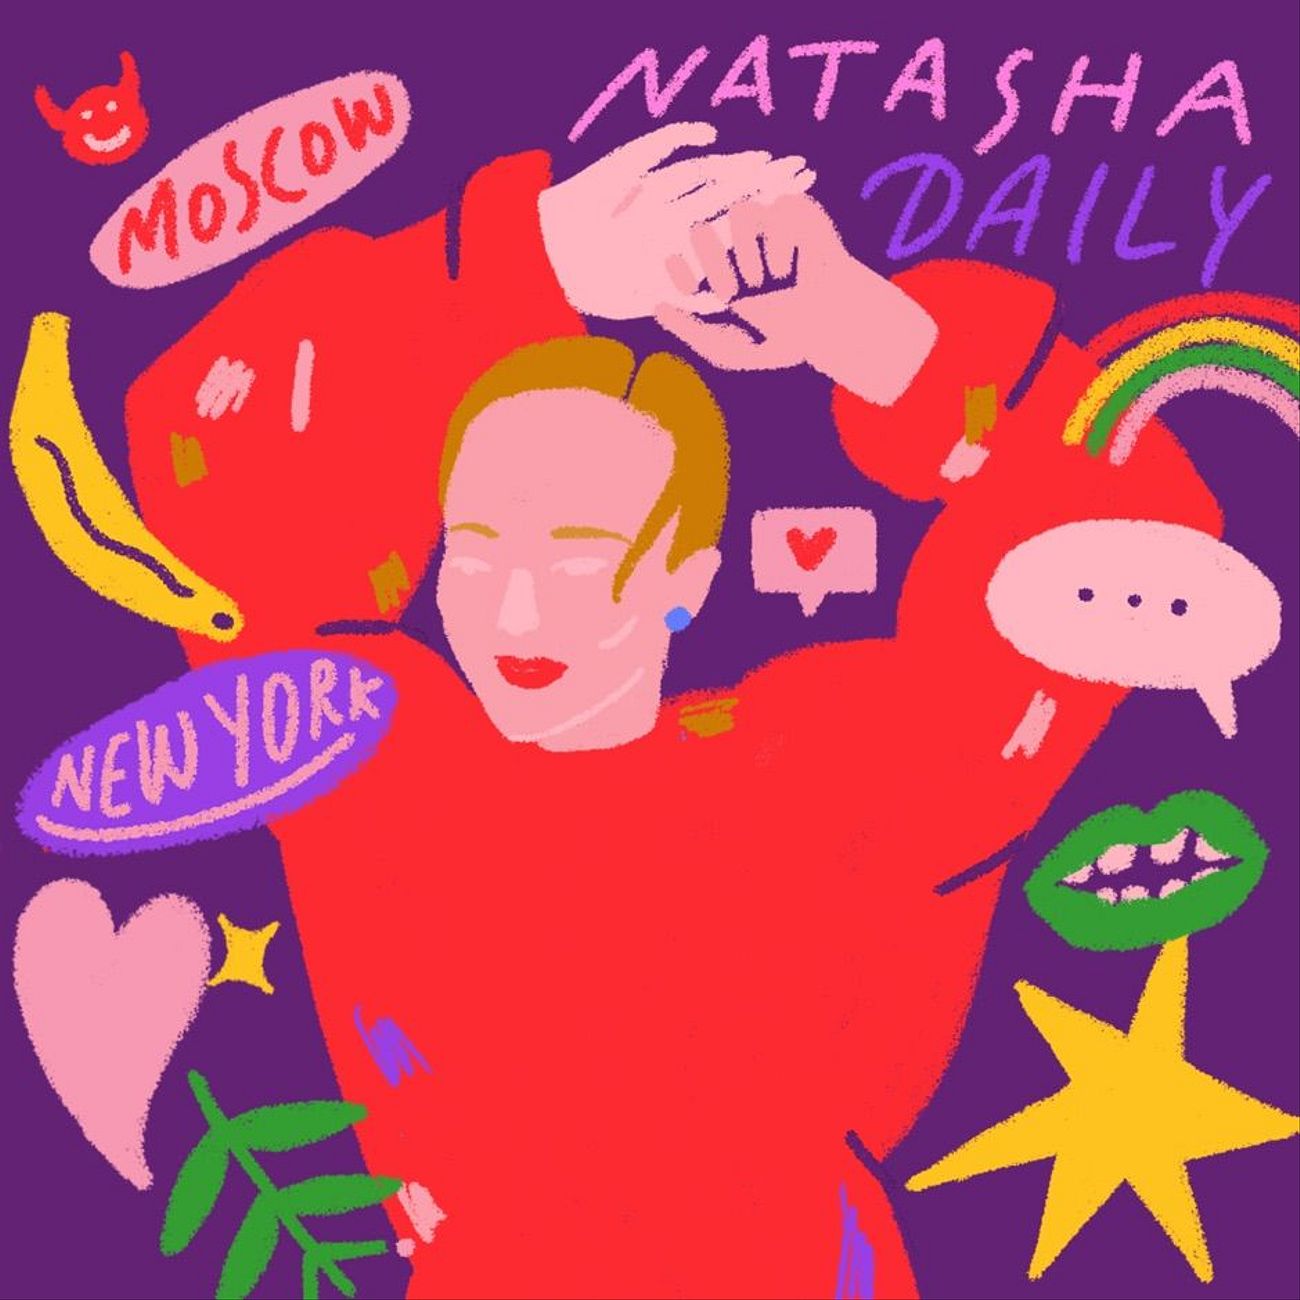 Natasha Daily 